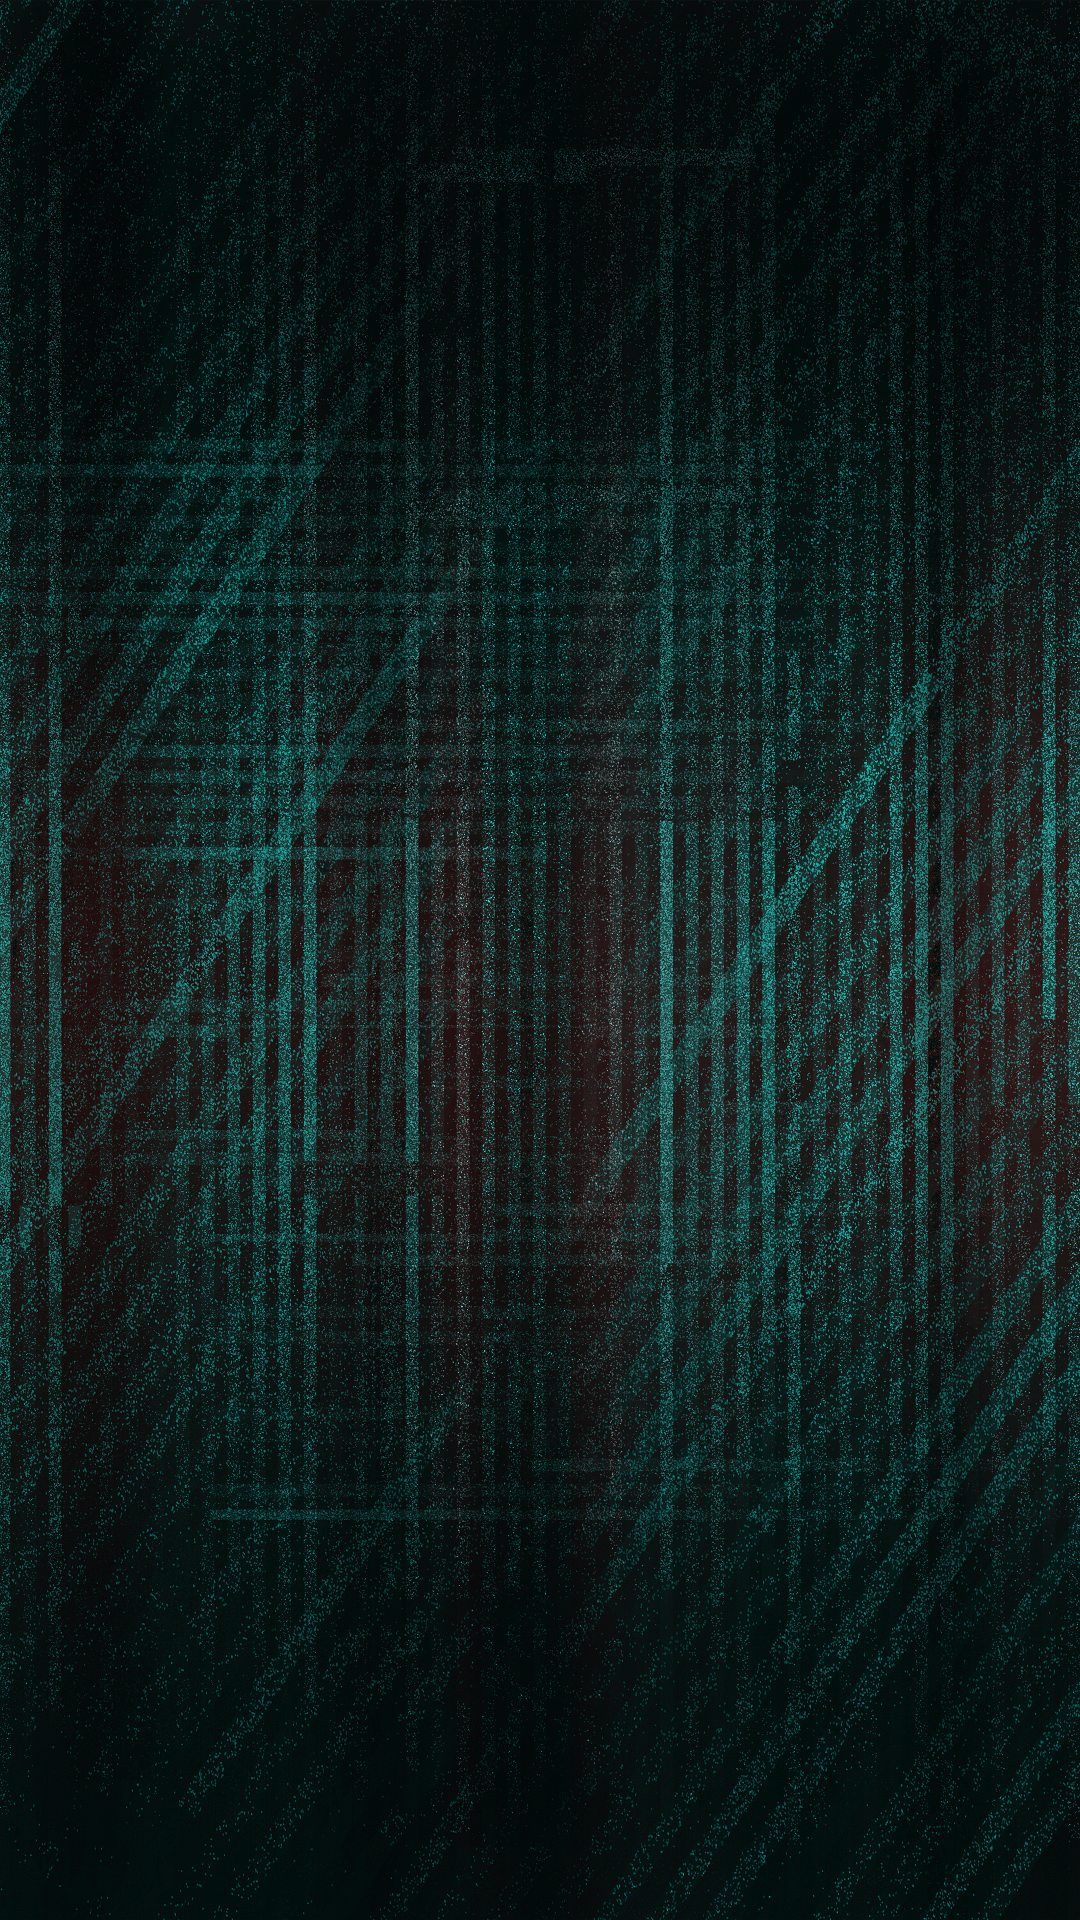 Dark Green Iphone Wallpapers - Wallpaper Cave